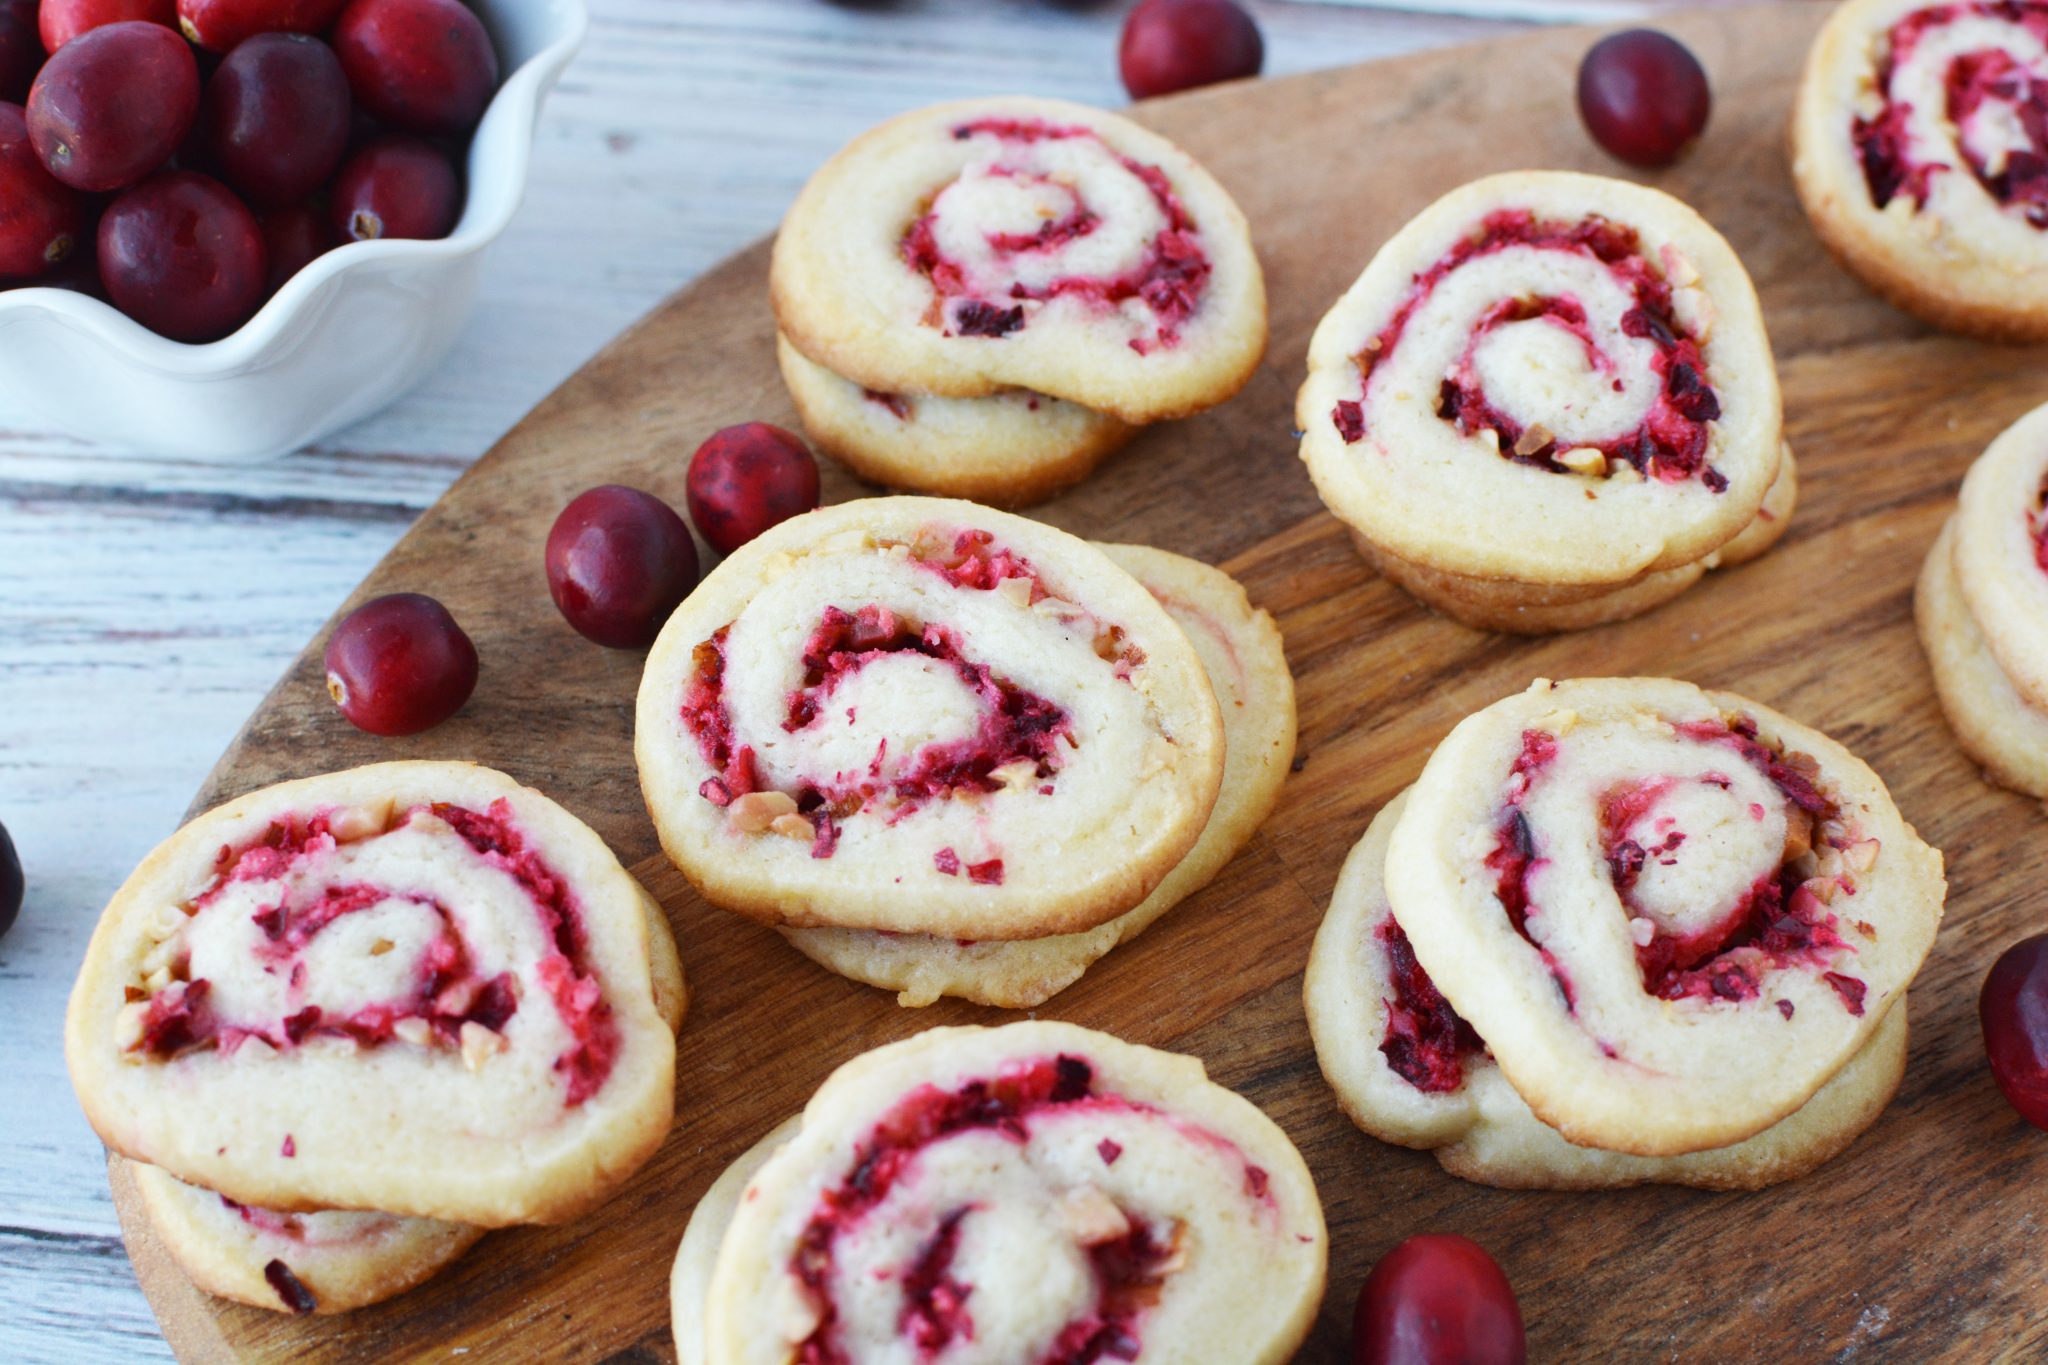 Cranberry Pinwheel Cookies Recipe for Christmas